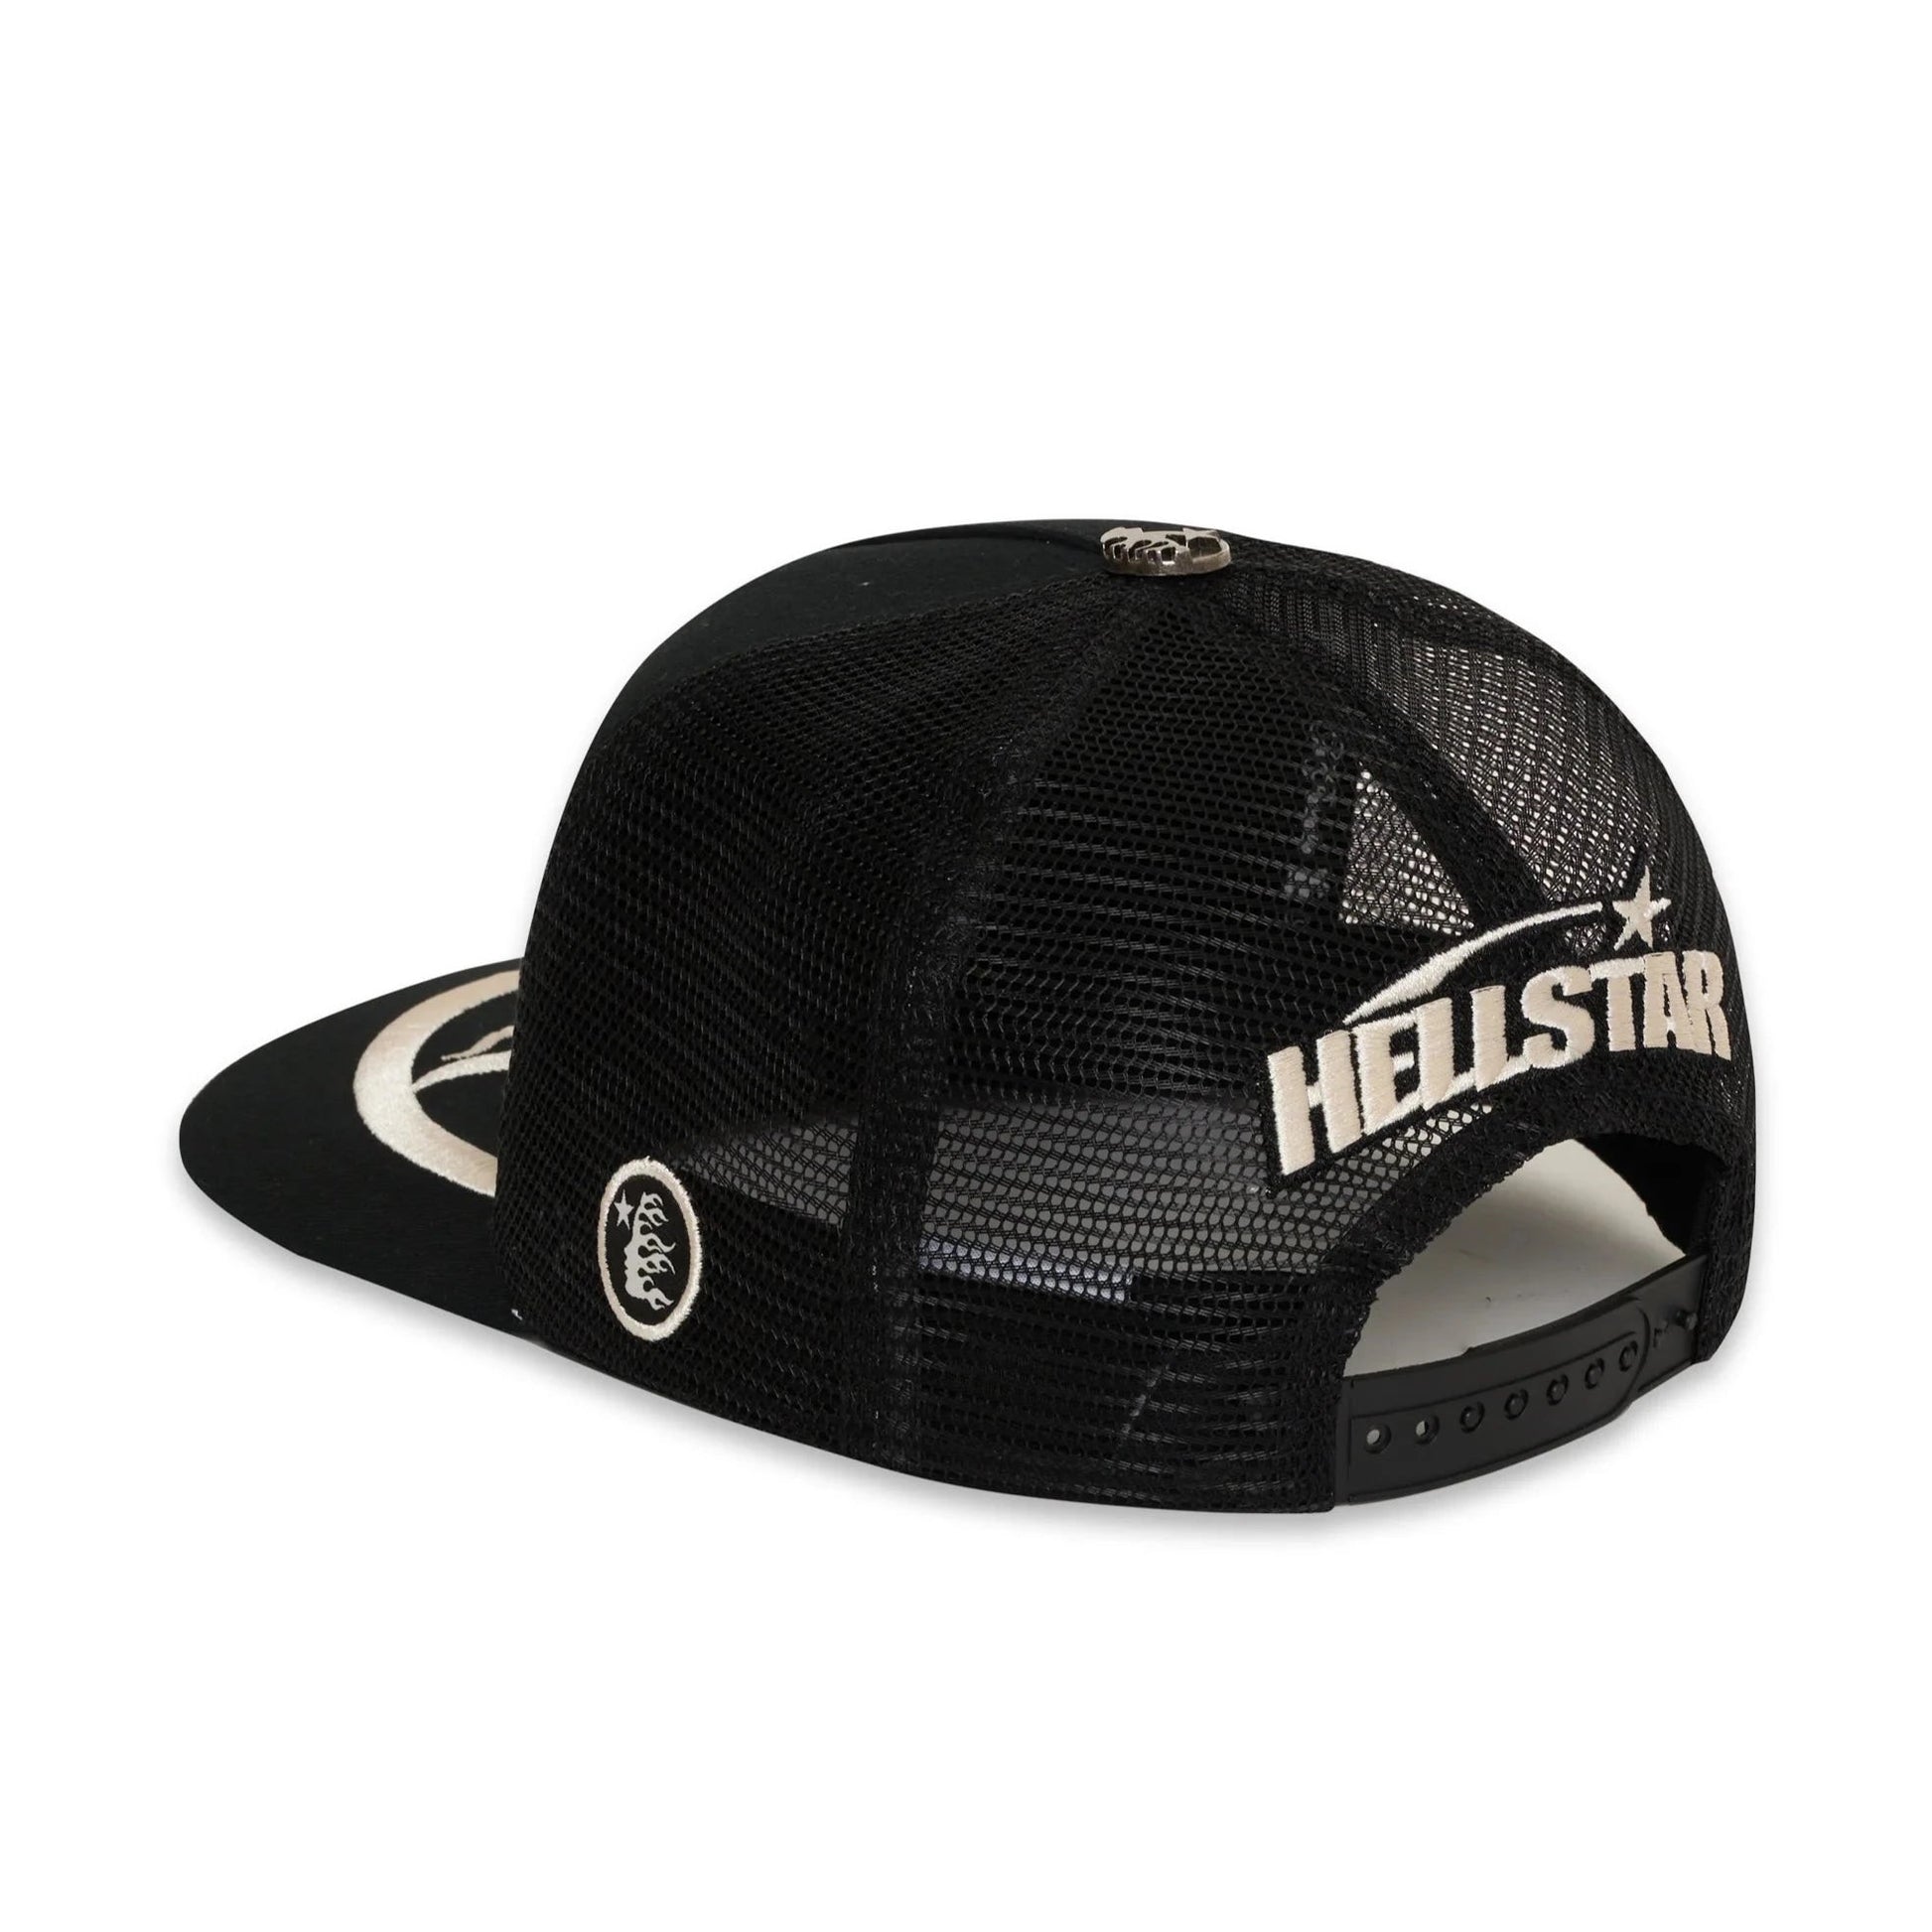 Hellstar Big Logo Trucker Snapback Hat - Sneakersbe Sneakers Sale Online